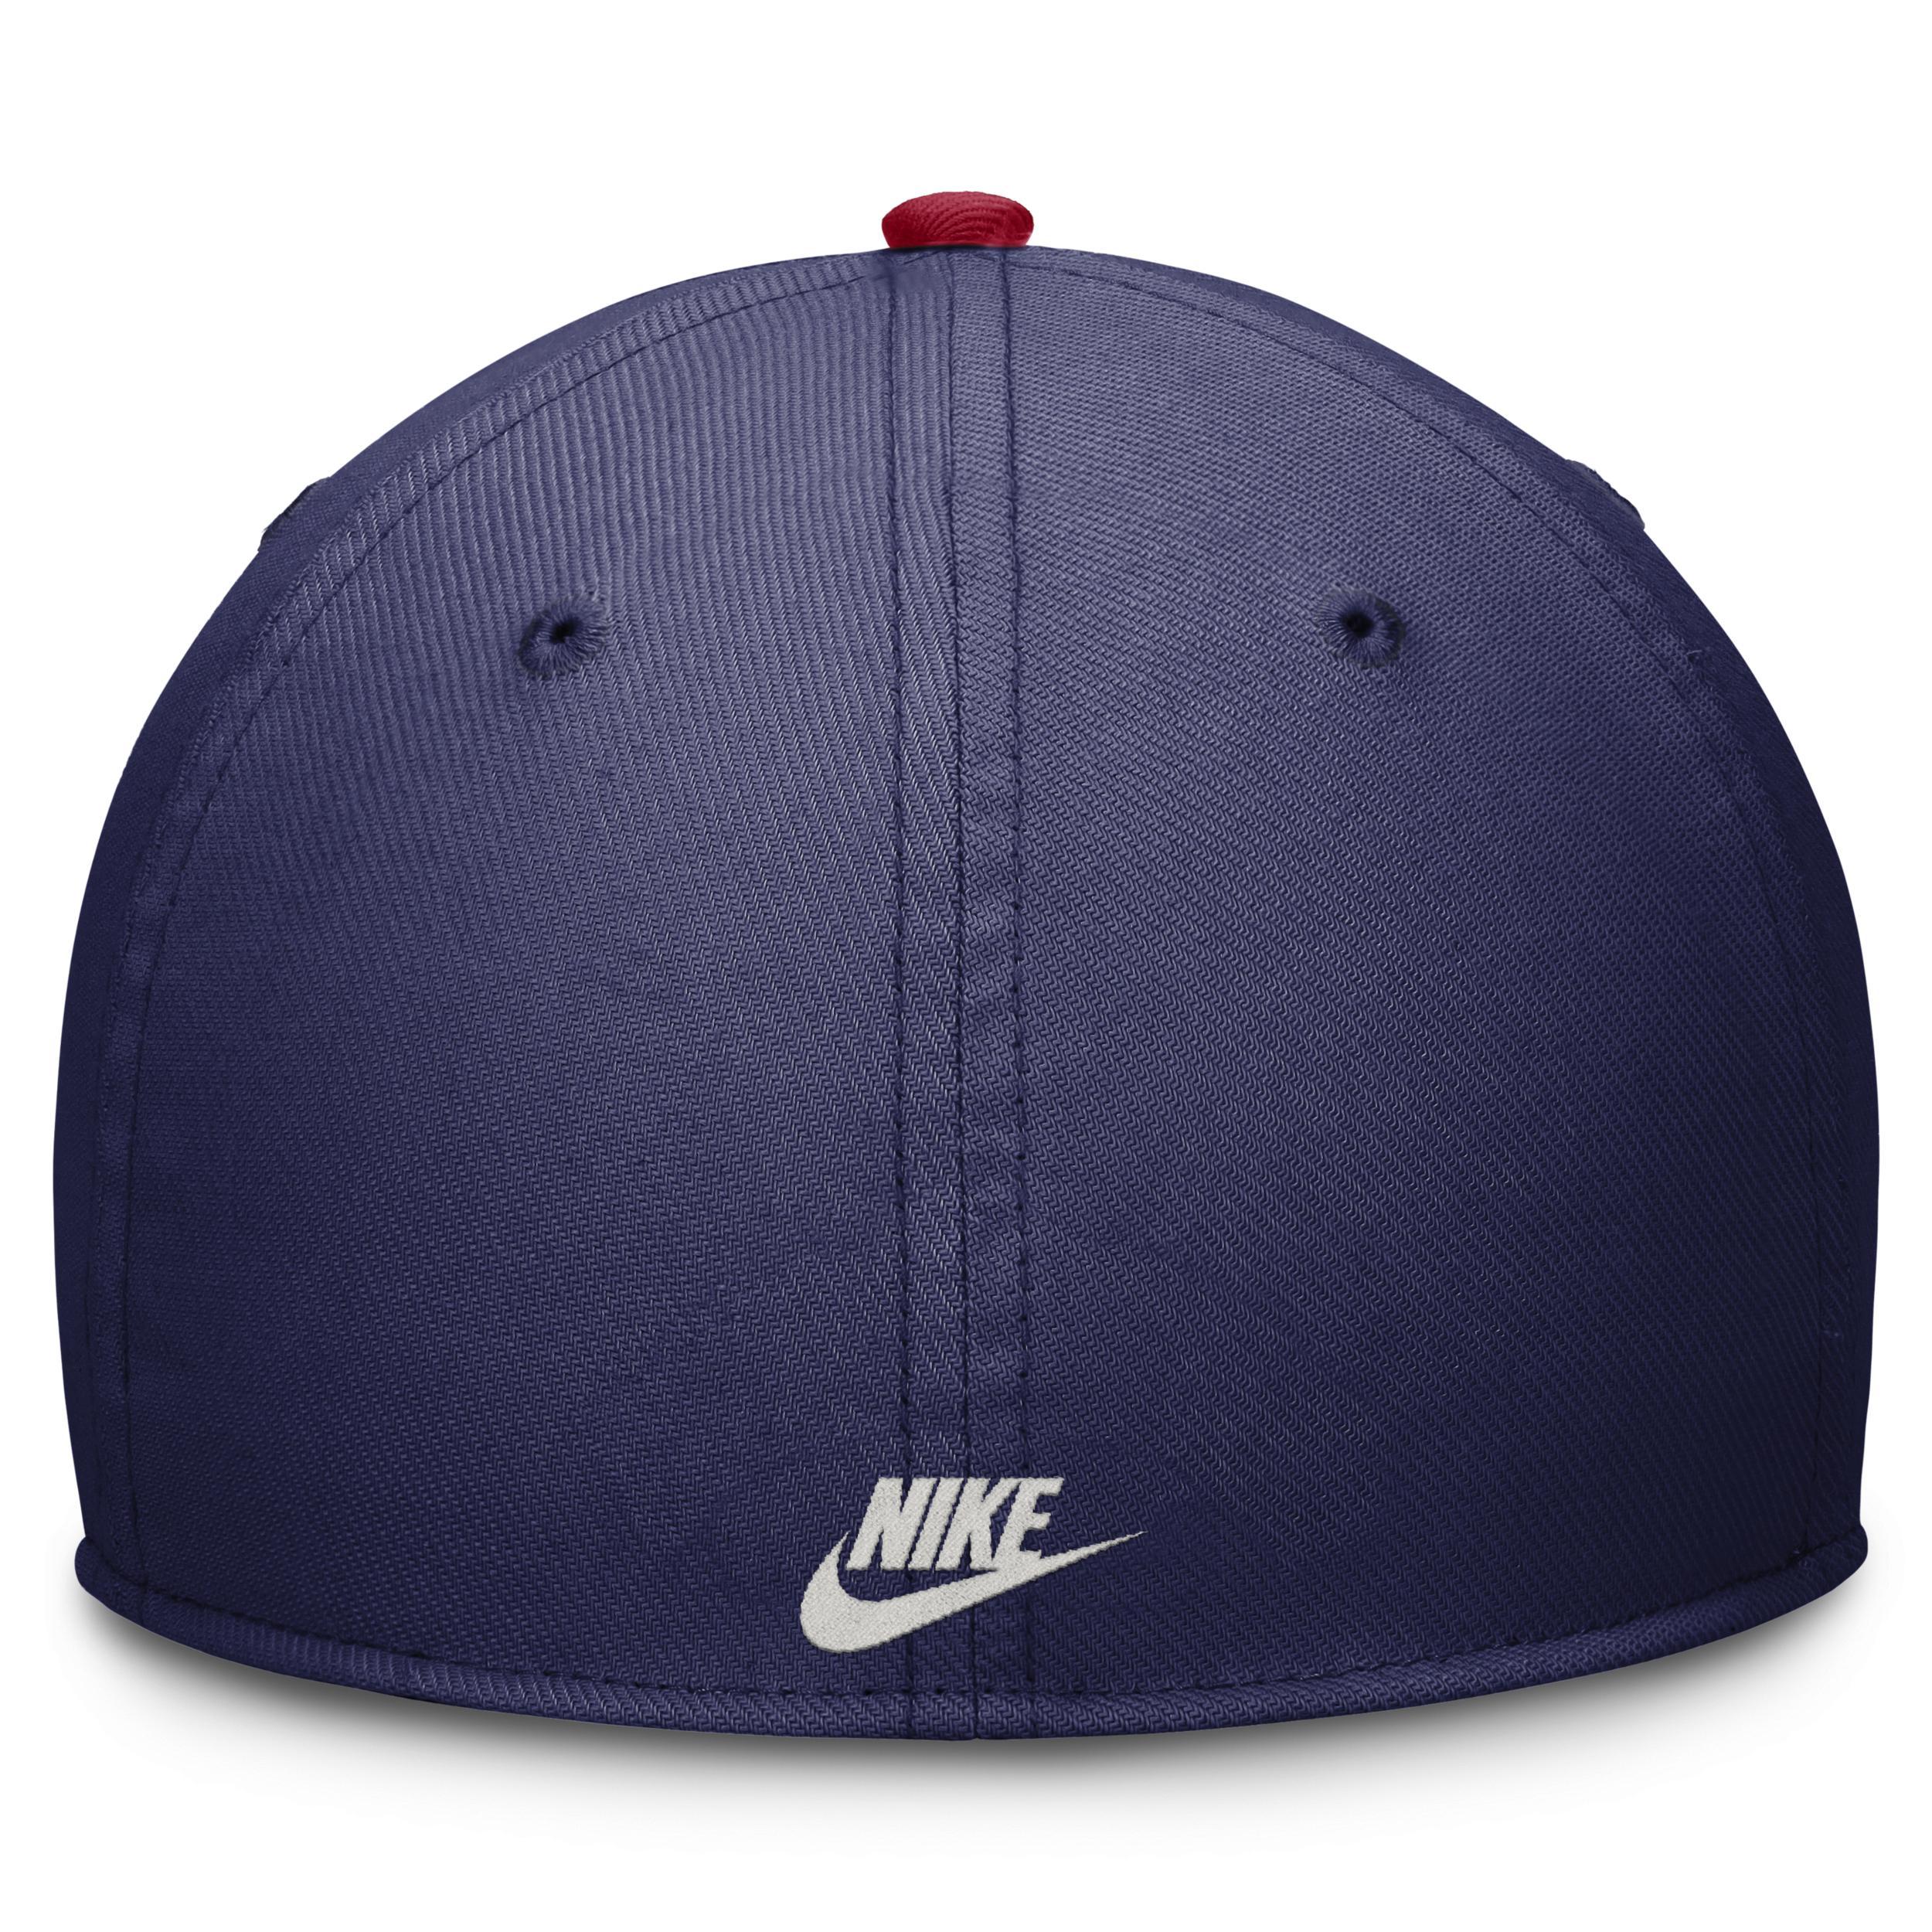 St. Louis Cardinals Statement Swoosh Nike Men's Dri-FIT MLB Hat Product Image